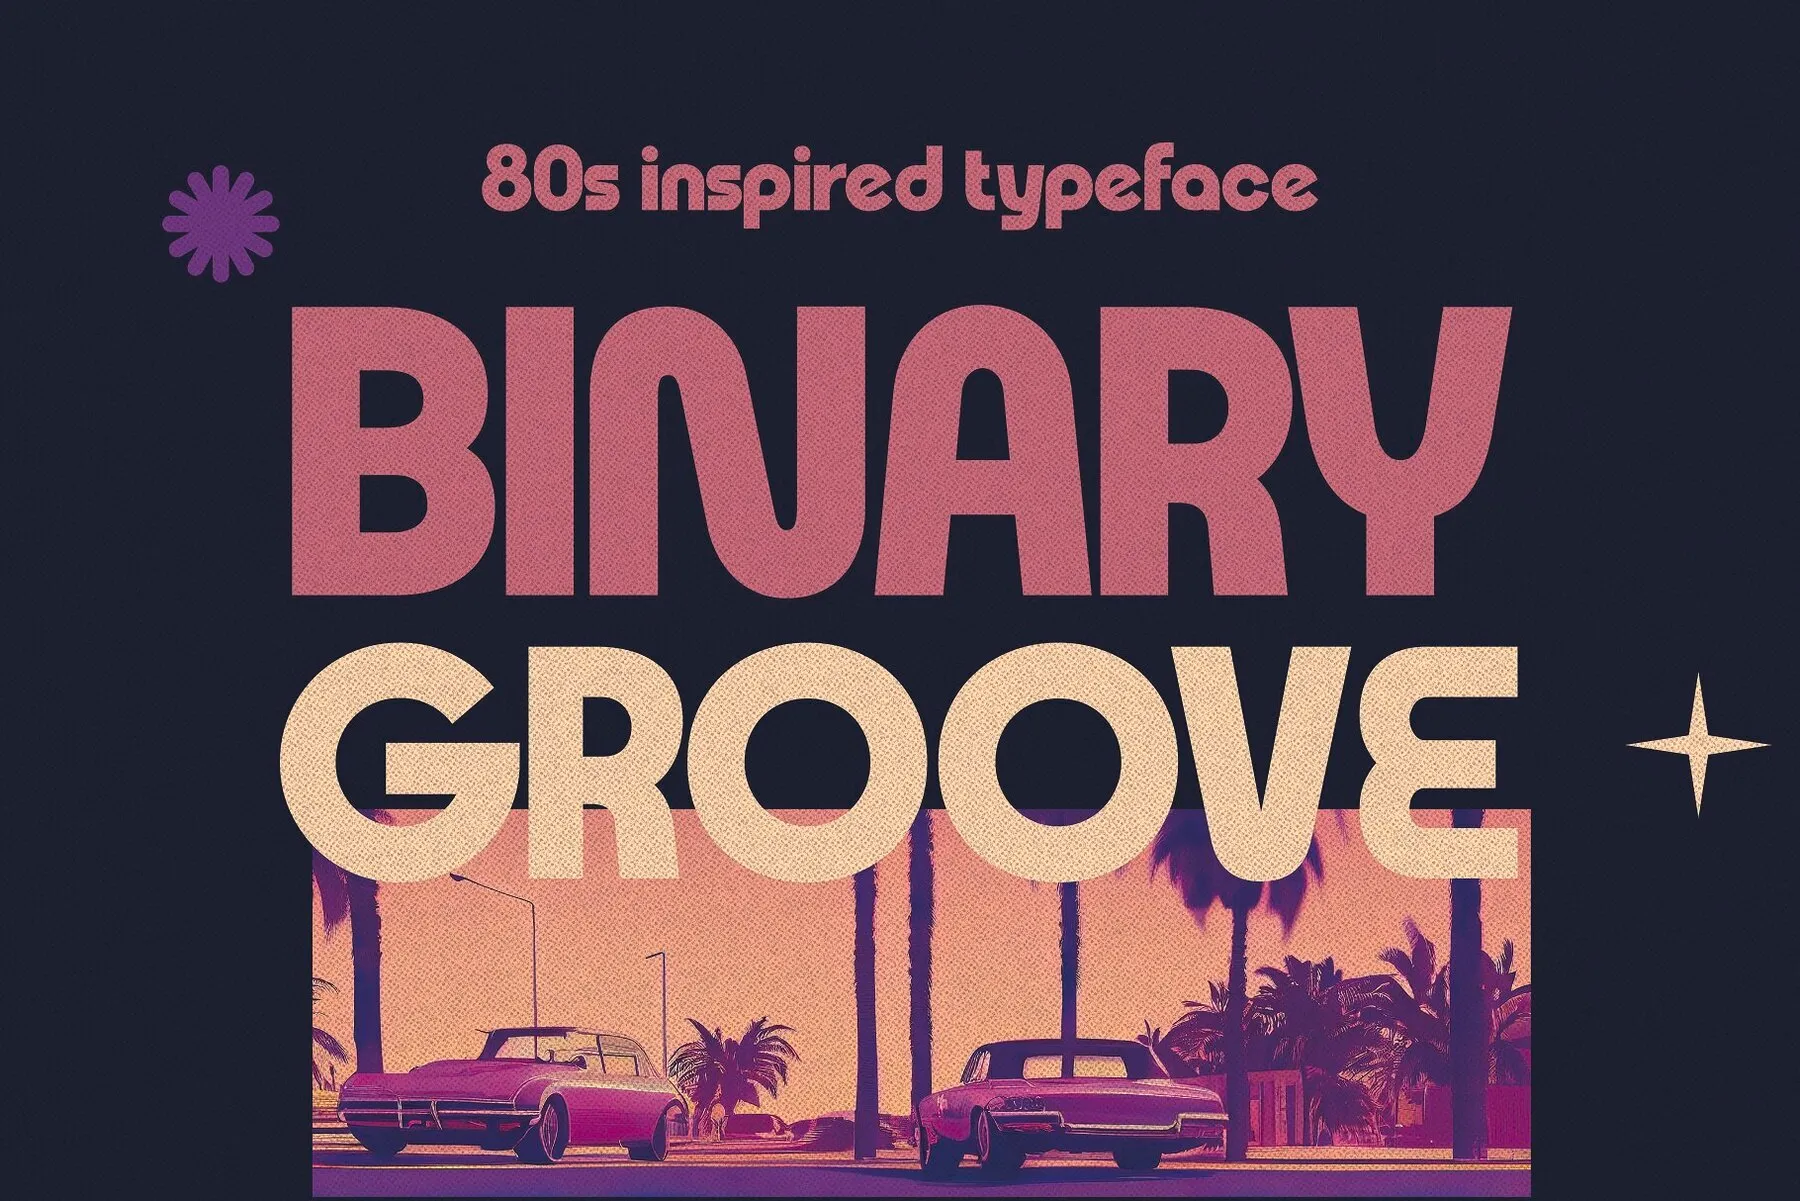 Binary Groove